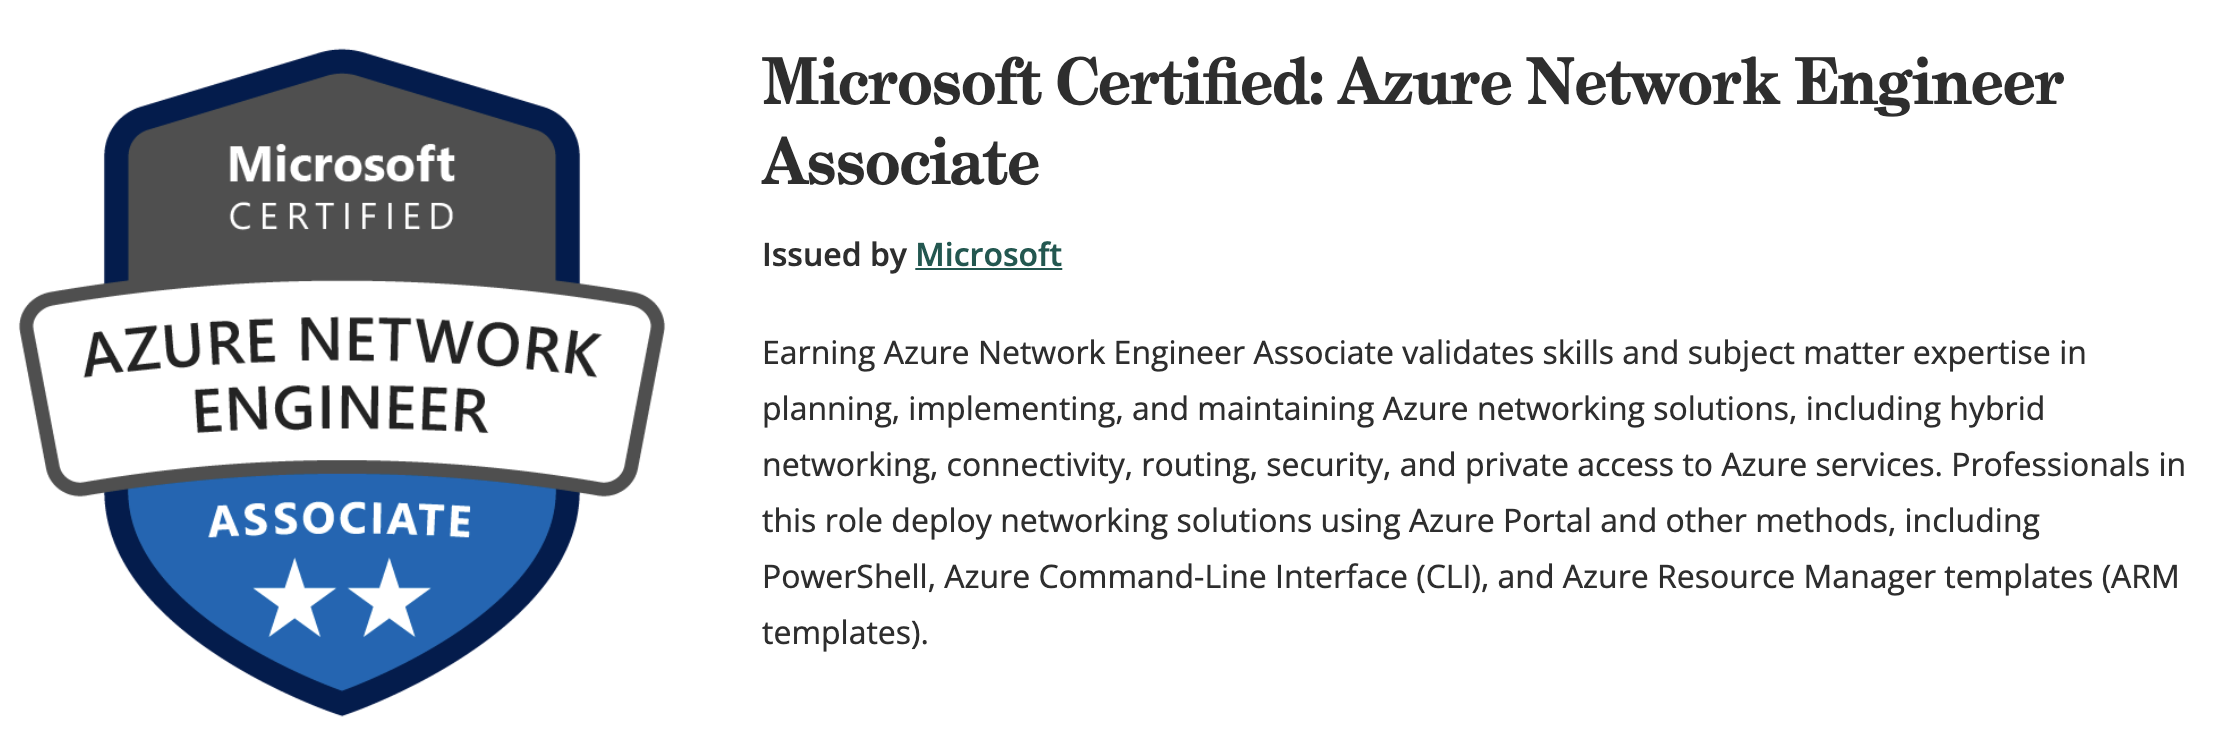 "Azure Network Engineer"